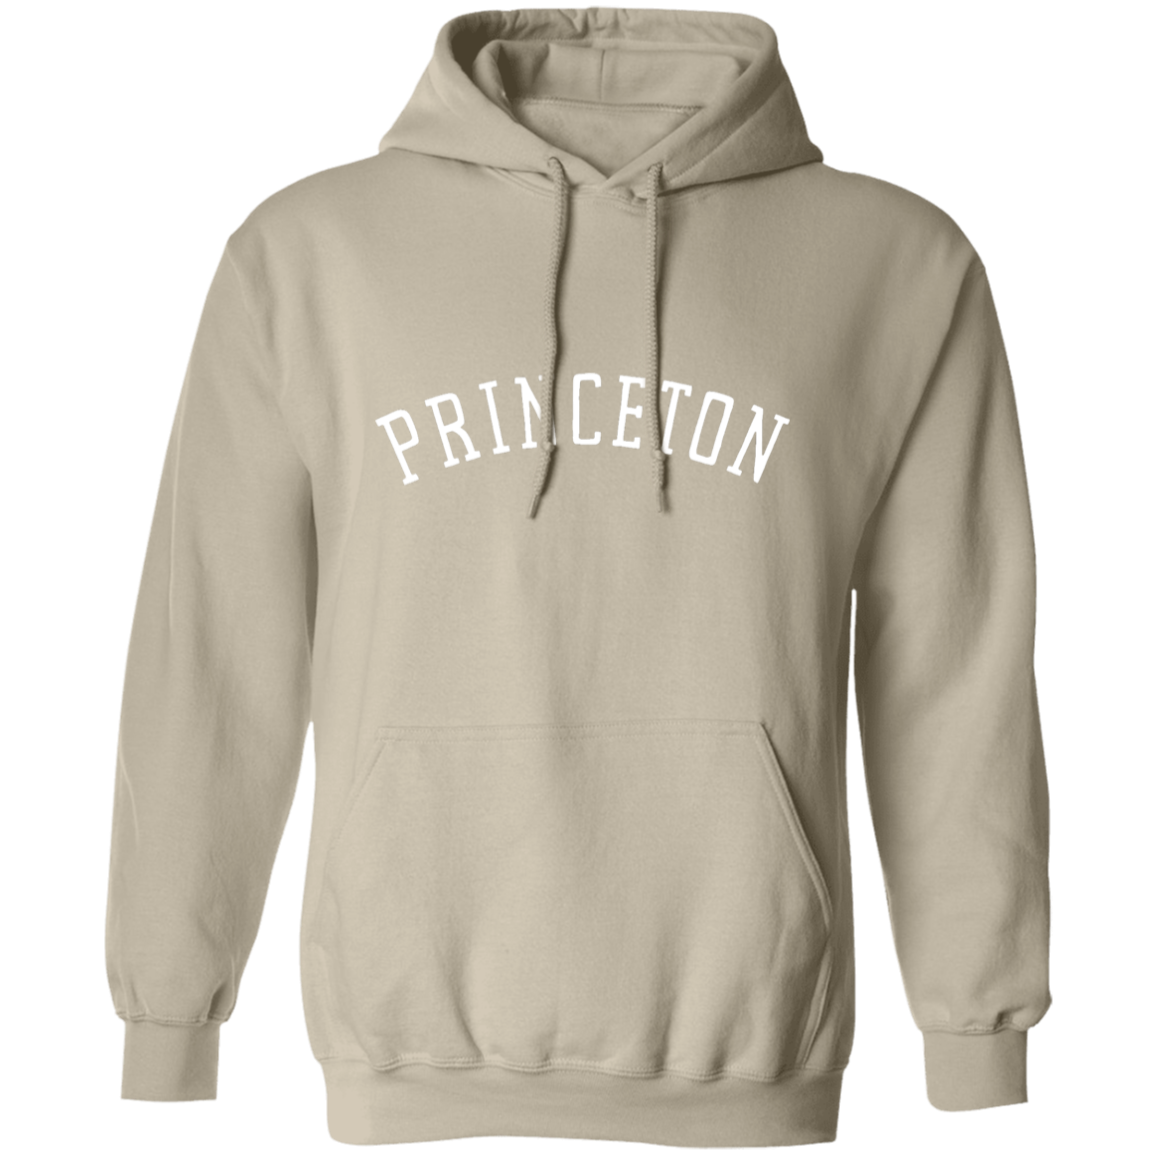 College Princeton Pullover Hoodie, Birthday Gift Hoodie Unisex